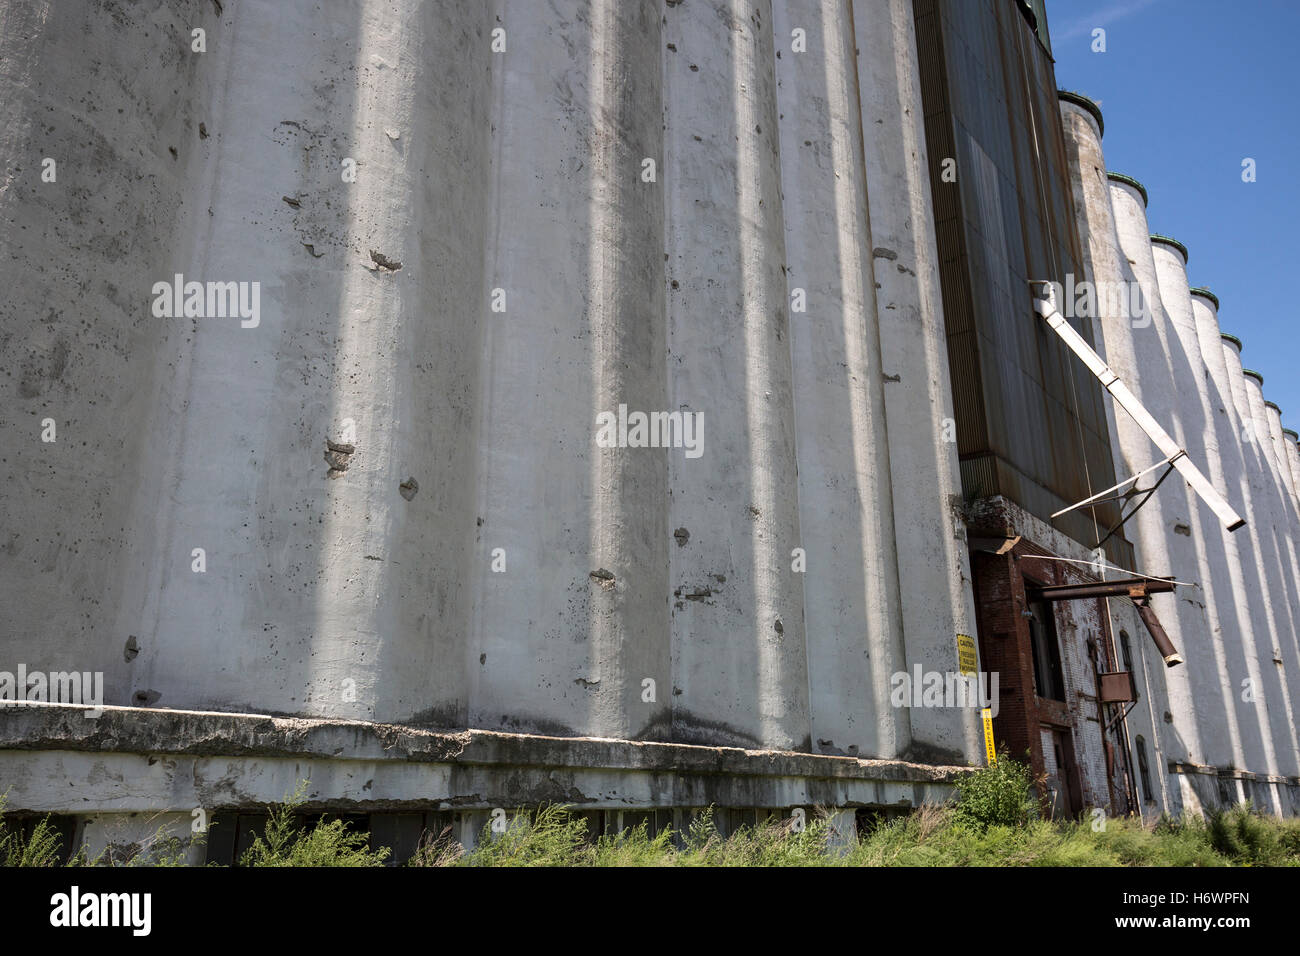 Old grain silos and field, Silo City, Buffalo New York. Stock Photo